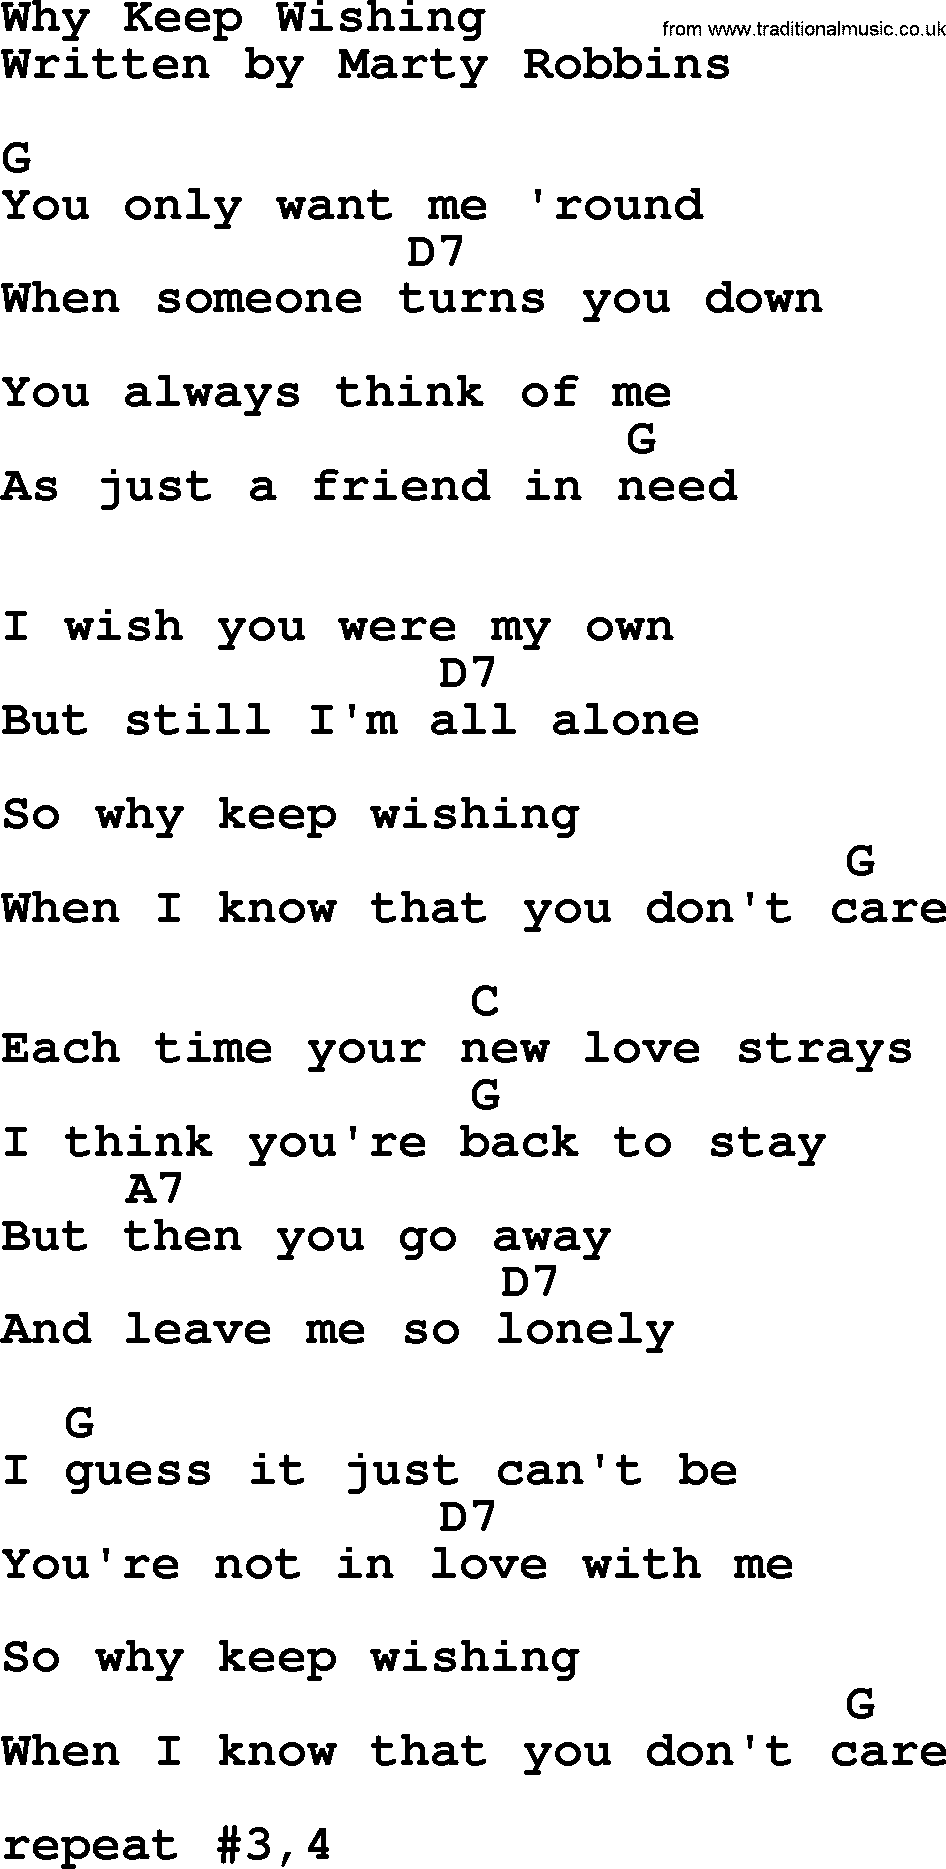 Marty Robbins song: Why Keep Wishing, lyrics and chords